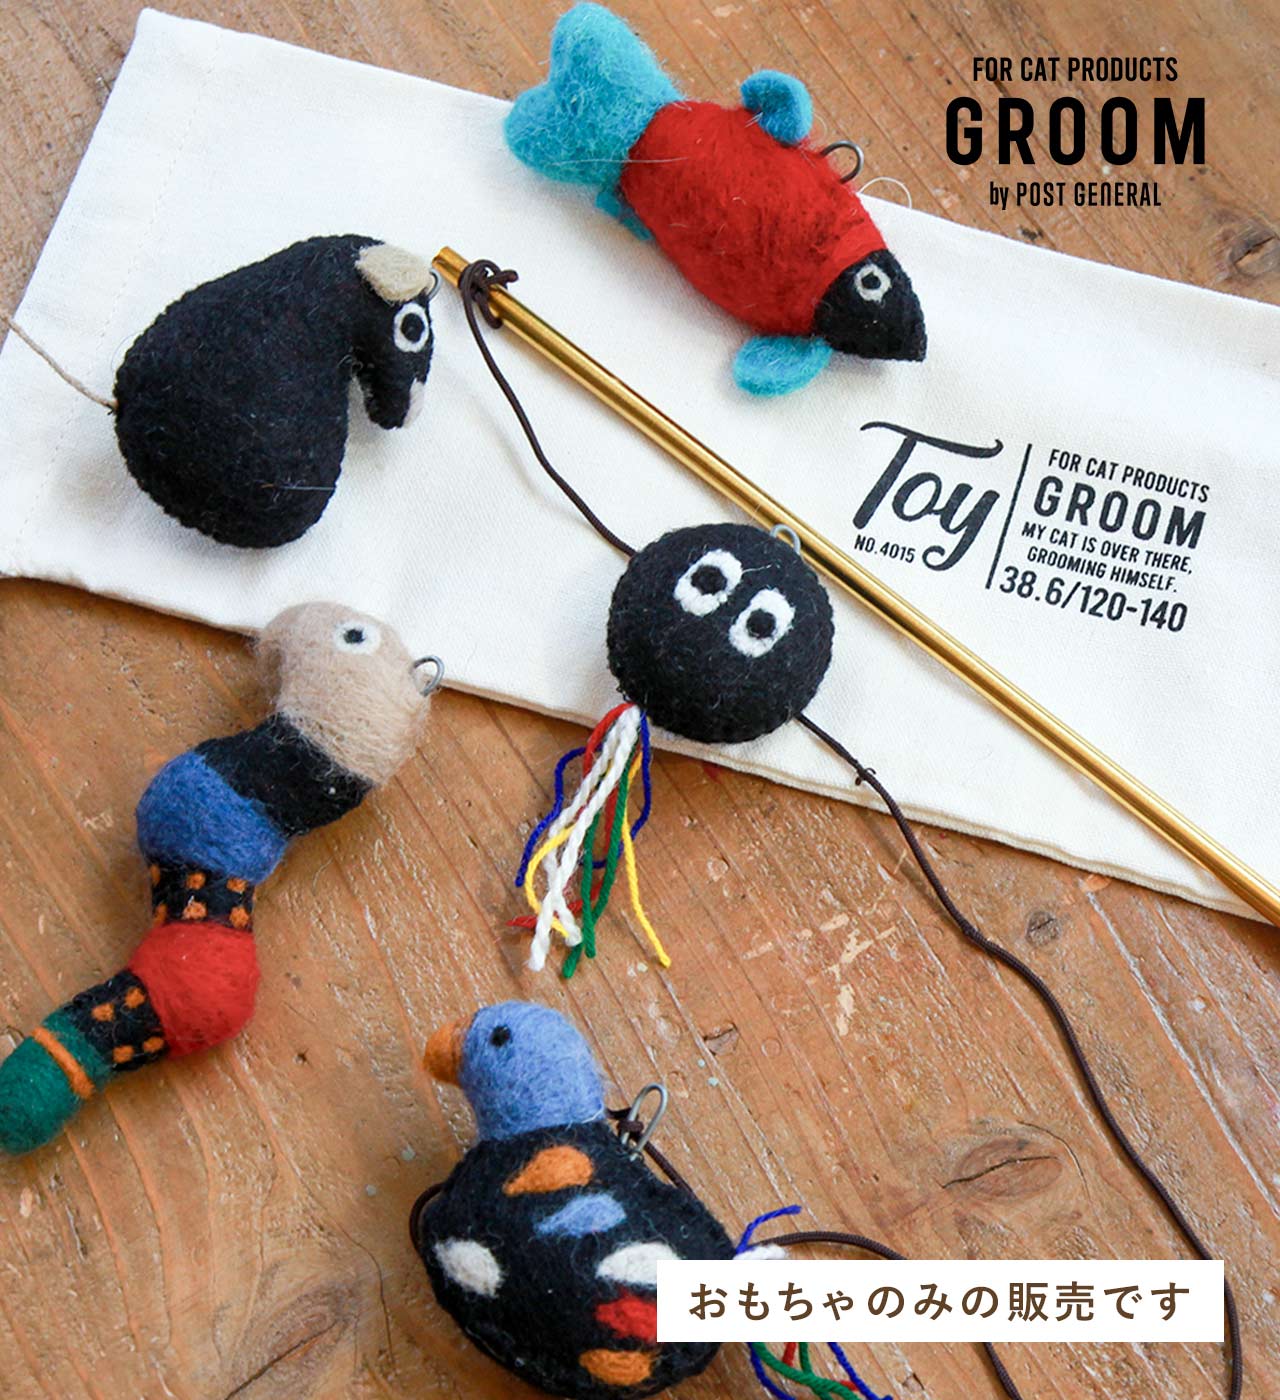 【GROOM】おもちゃ 単品 交換用 (5タイプ) GROOM / グルーム